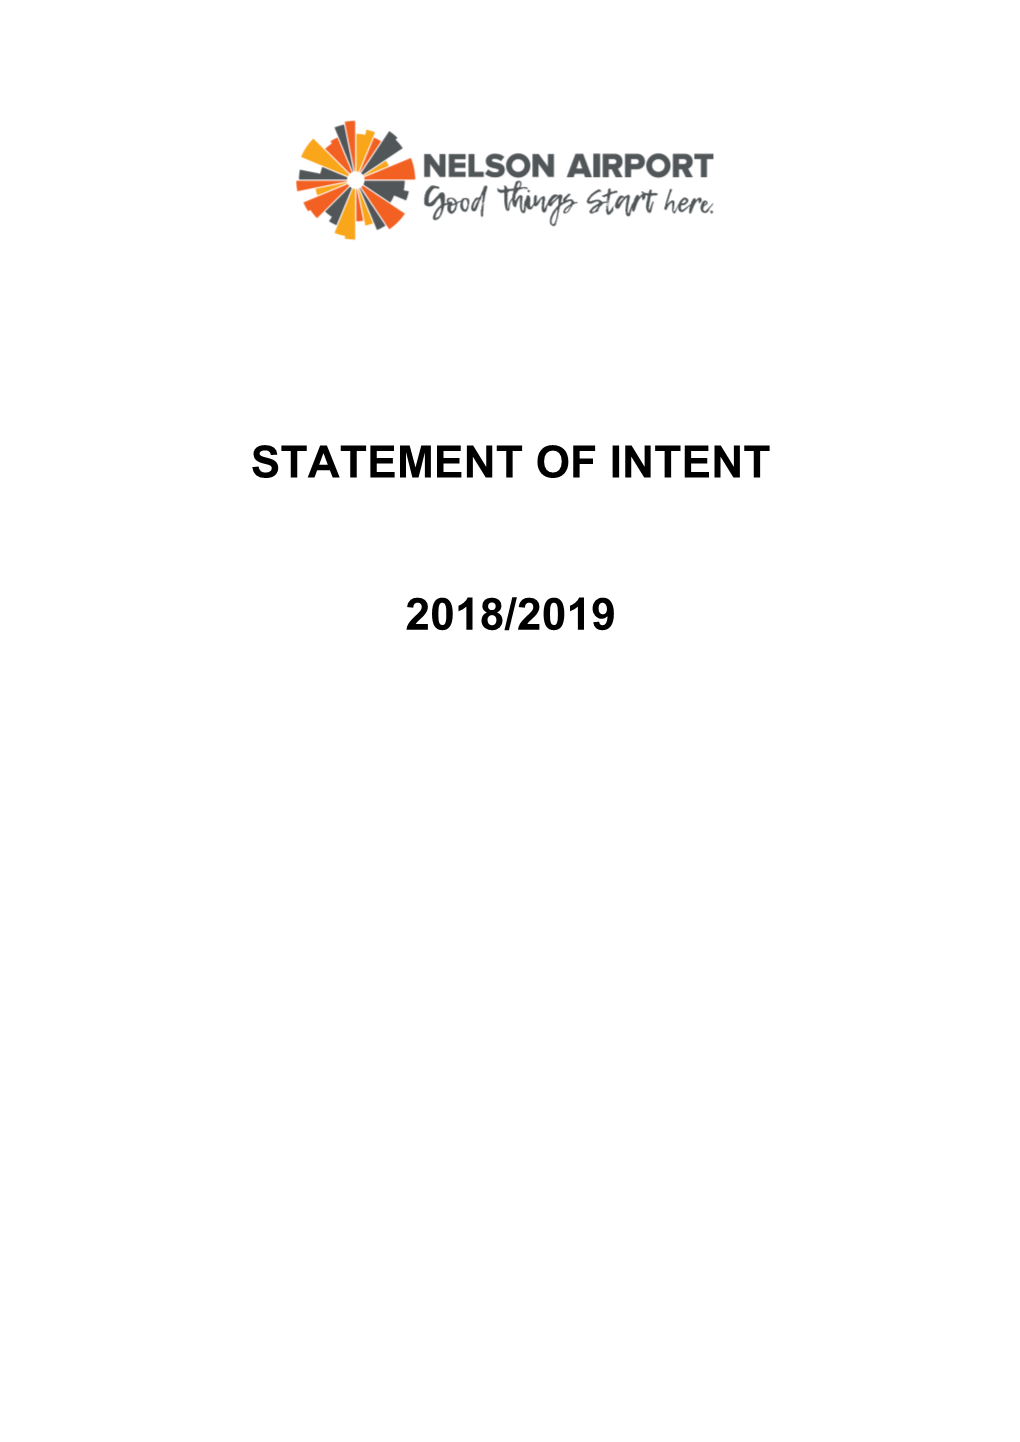 Statement of Intent 2018/2019